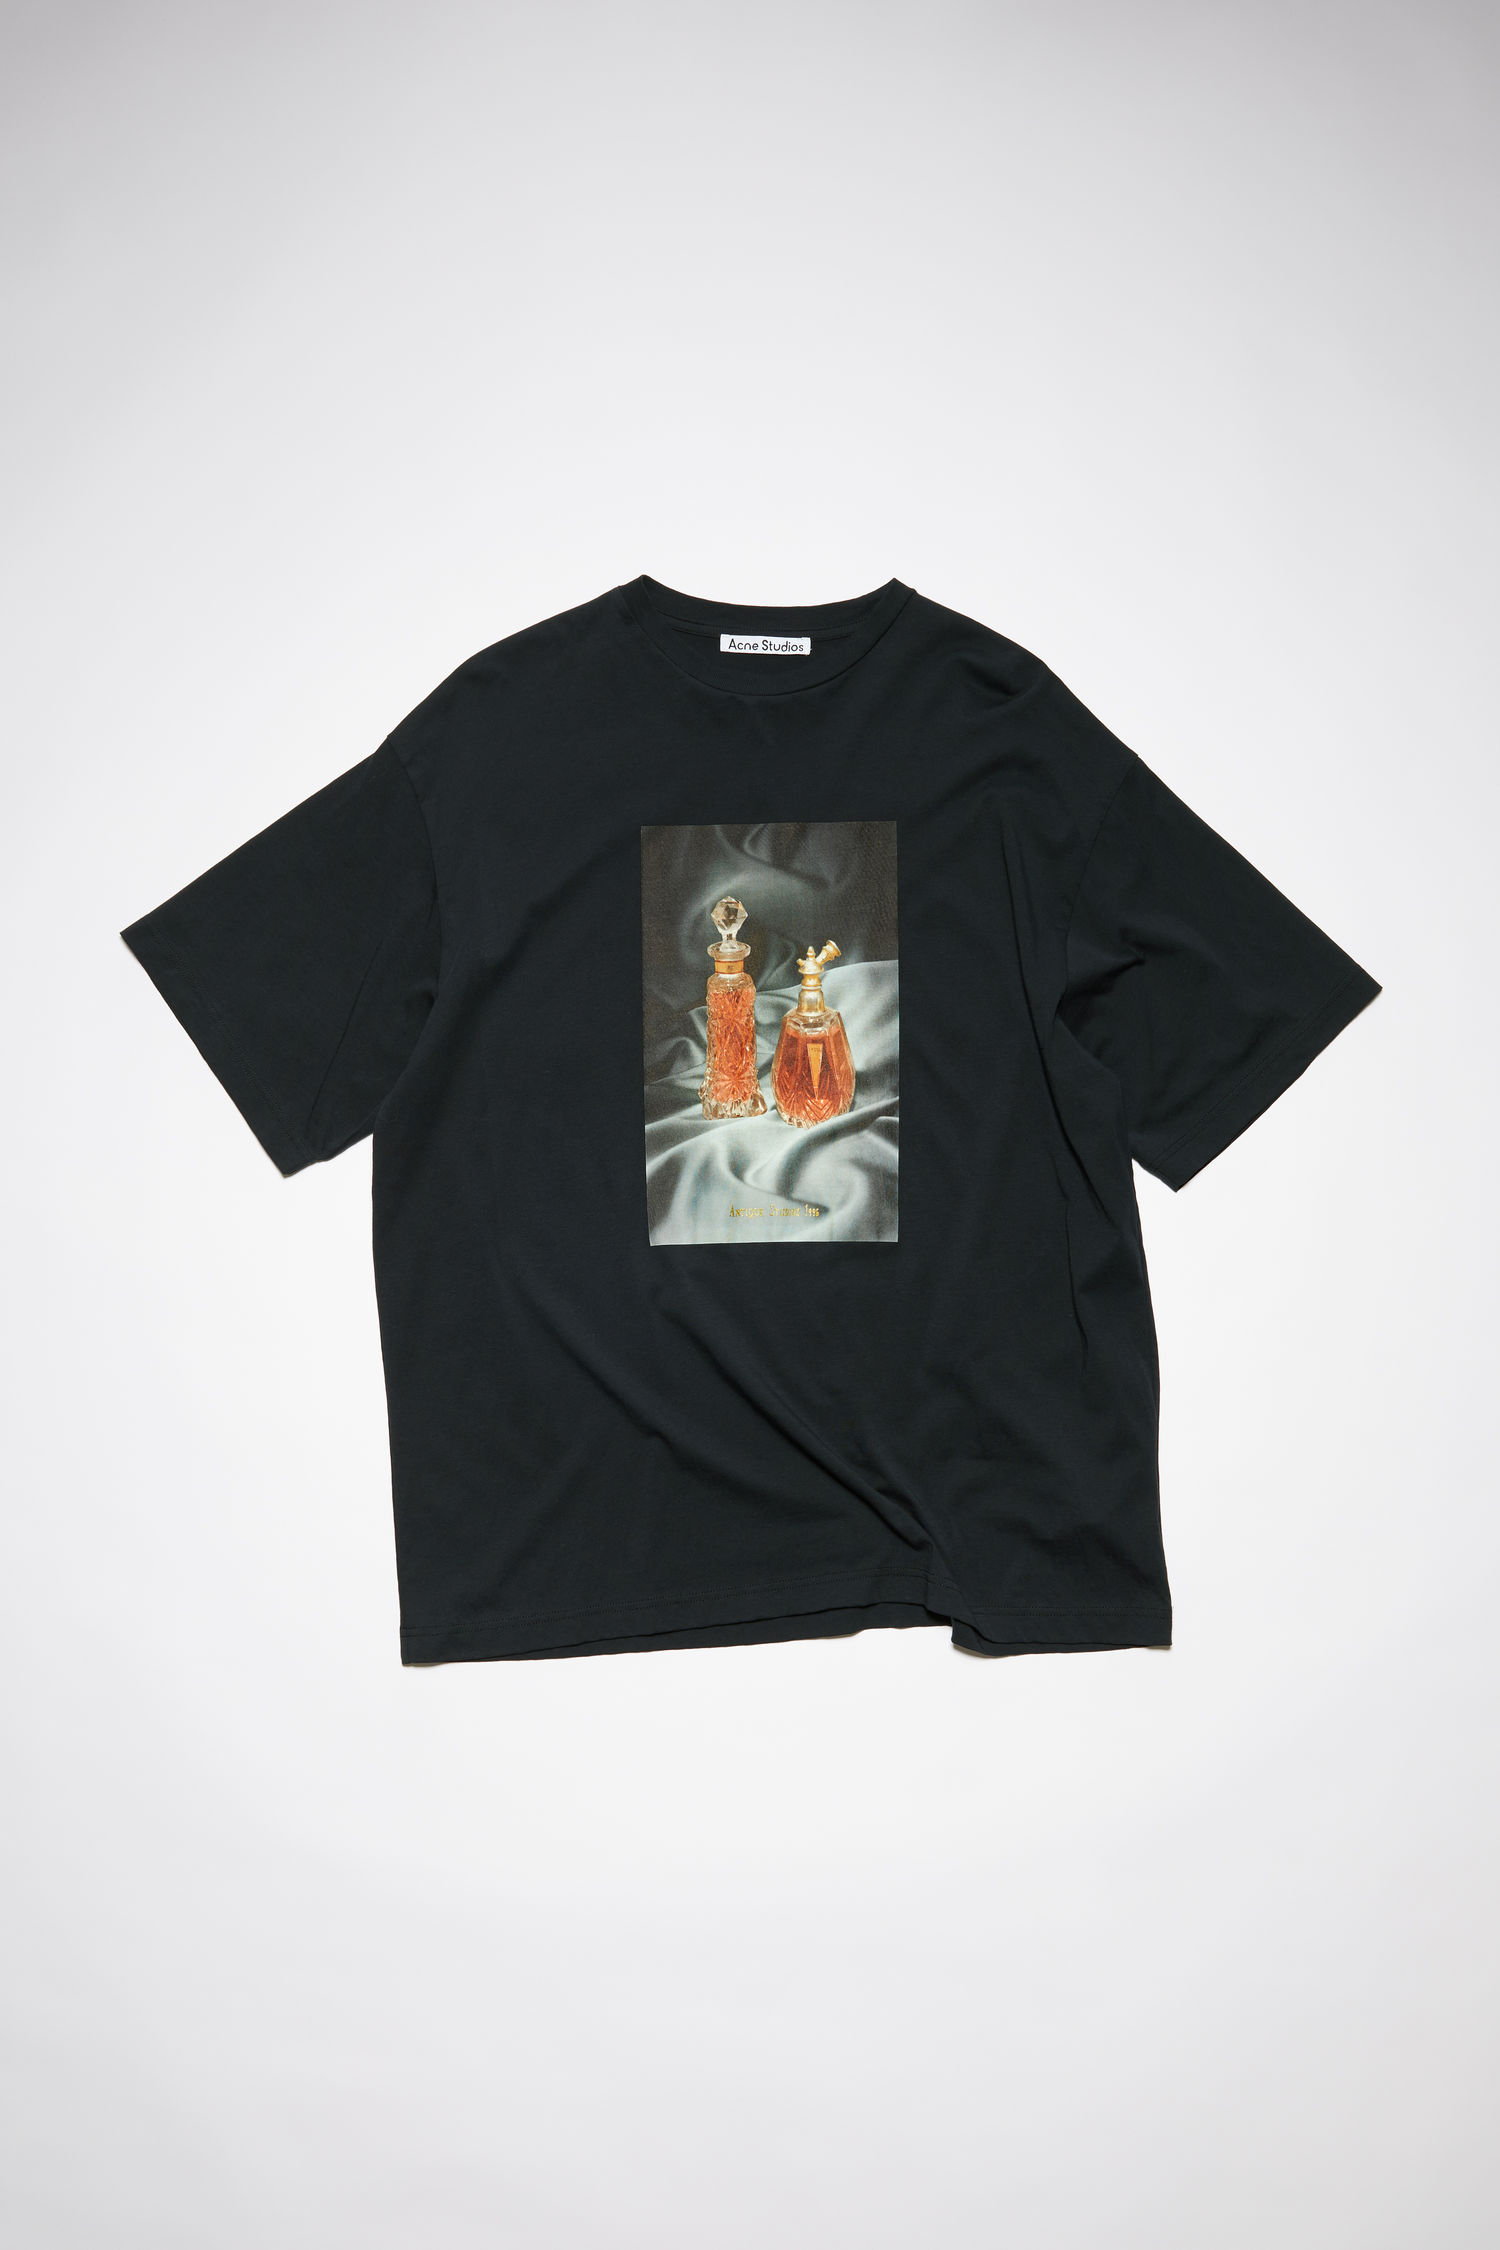 Acne Studios – Men’s T-shirts